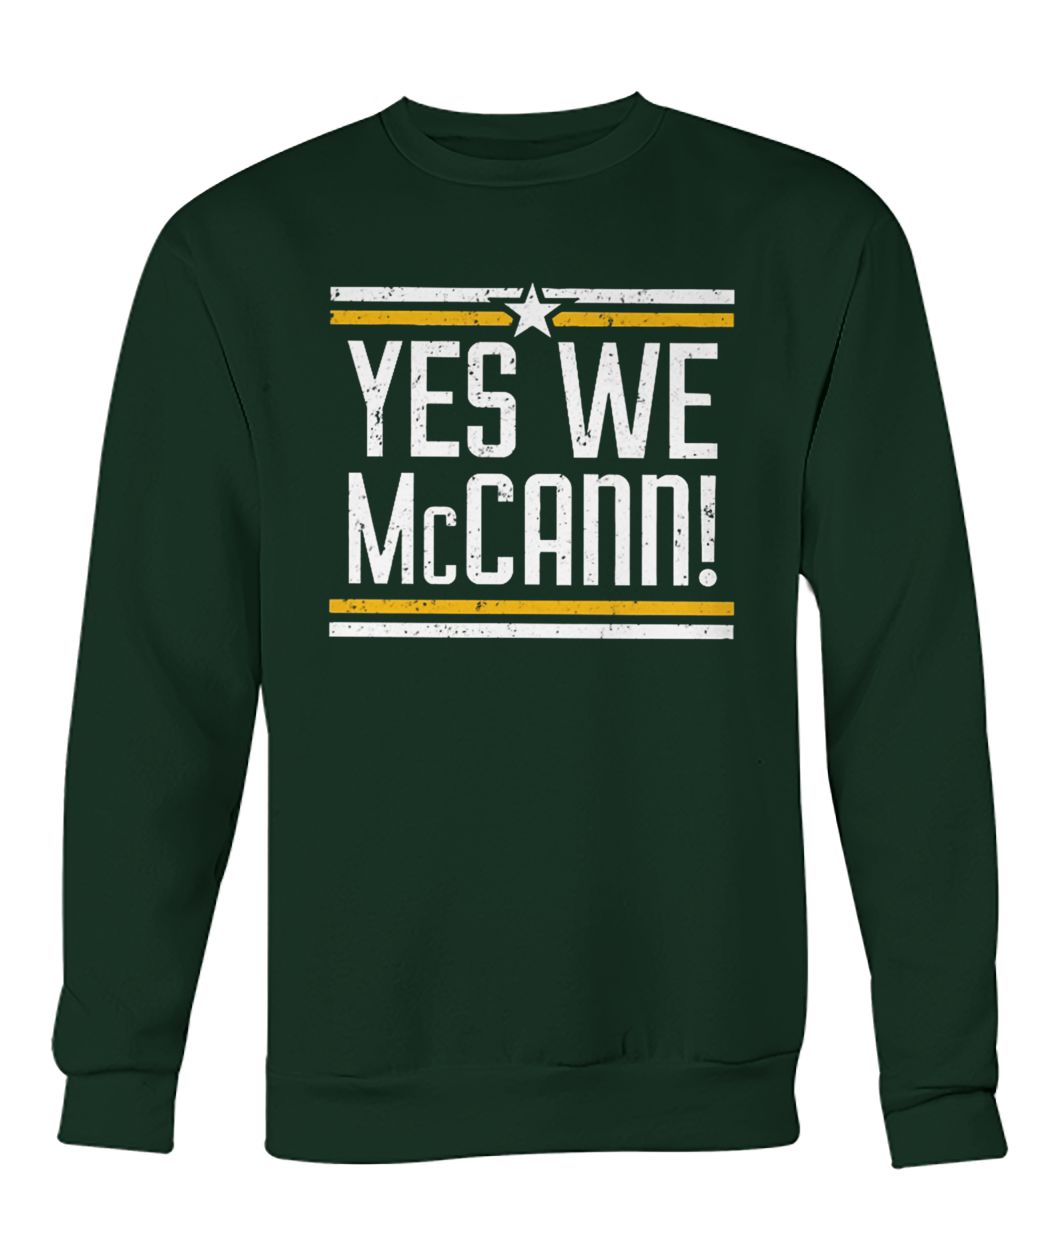 Yes we mccann NHL crew neck sweatshirt